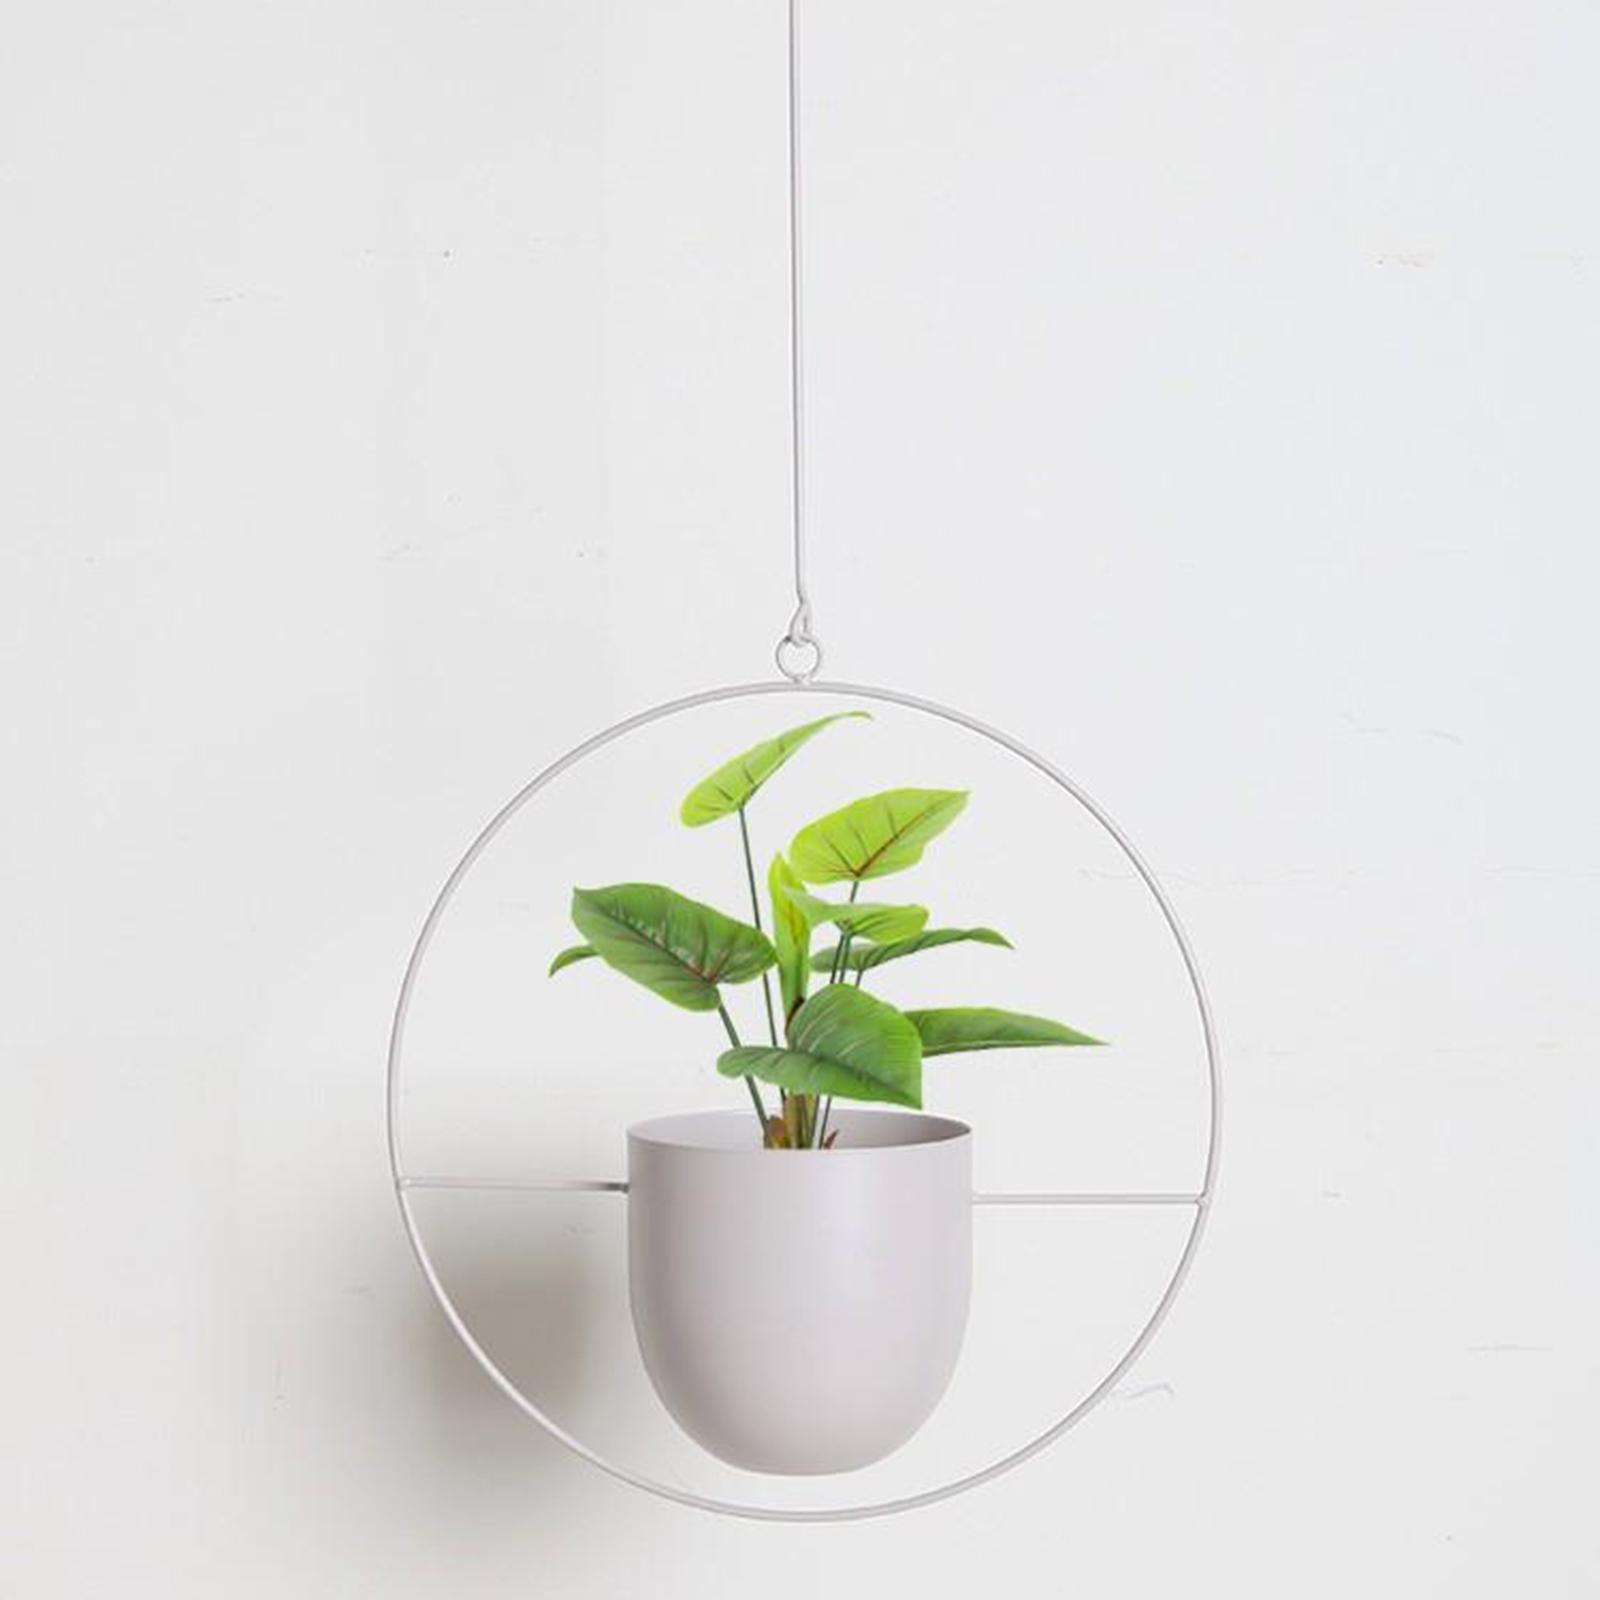 2- Metal Hanging Planter Pot Indoor Outdoor Flower Pot Plant Holder White